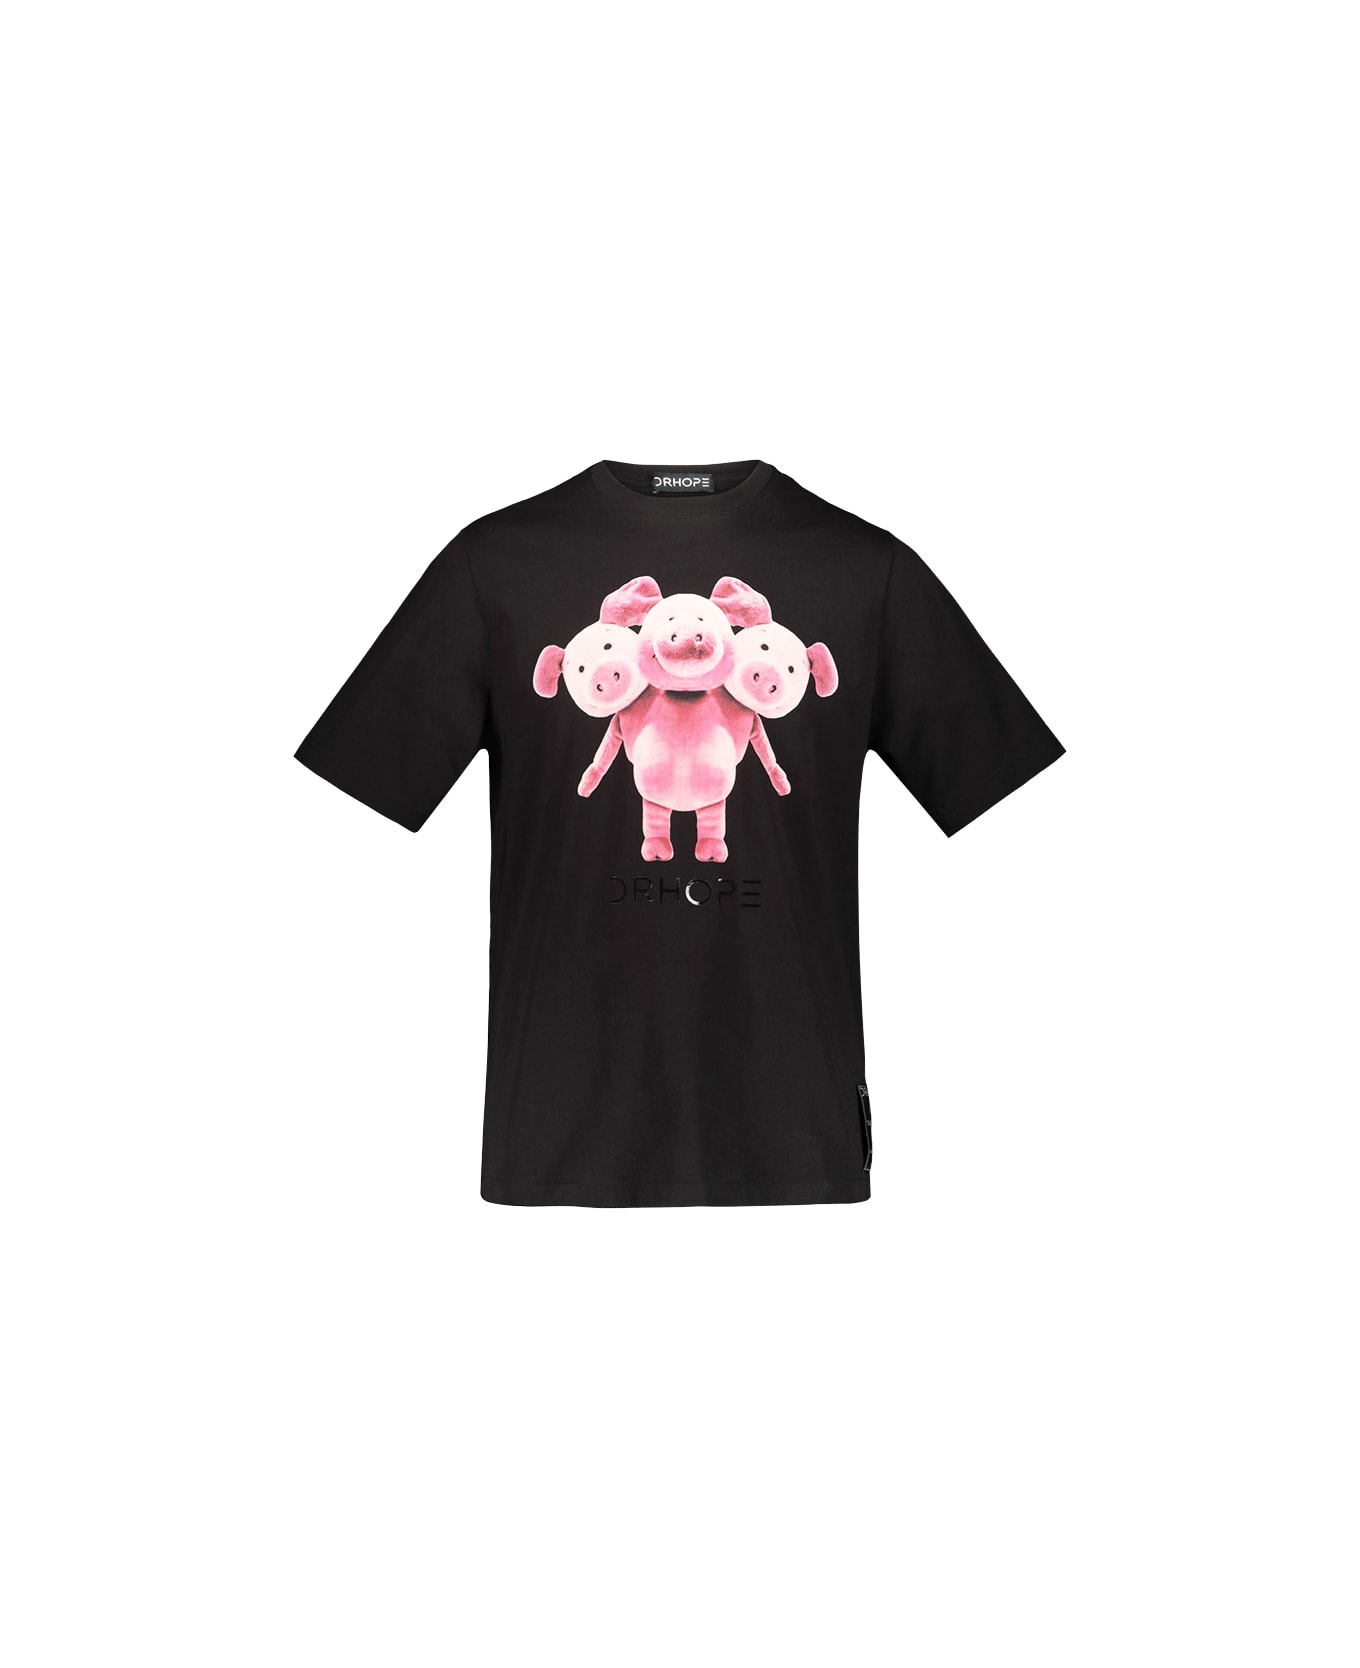 Drhope Black T-shirt With Pig Print - Black